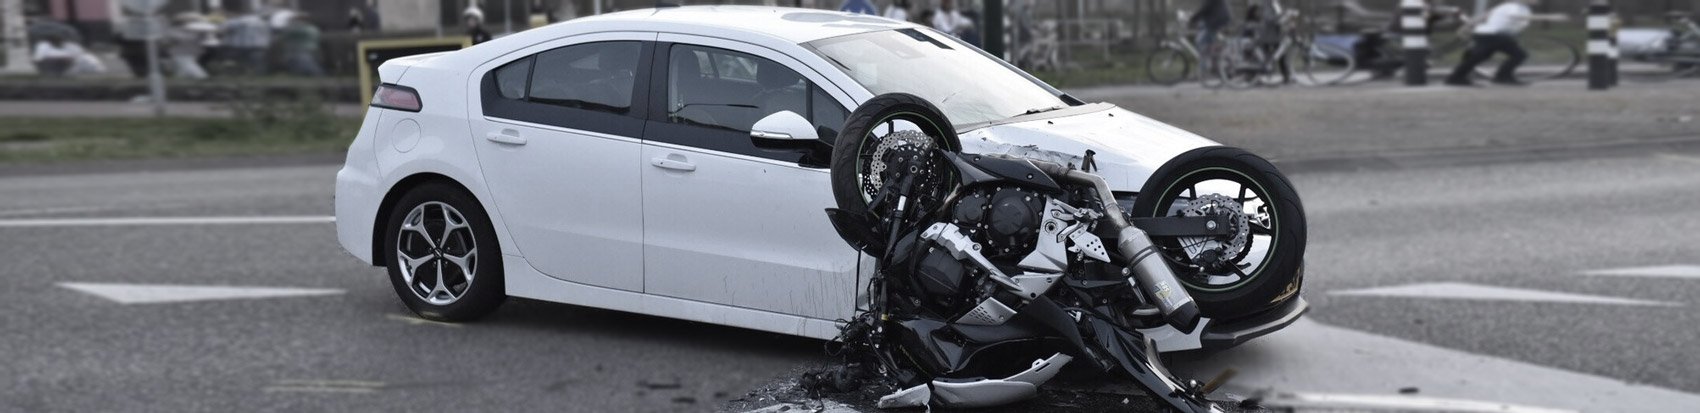 Motorongeval schadevergoeding | LetselPro